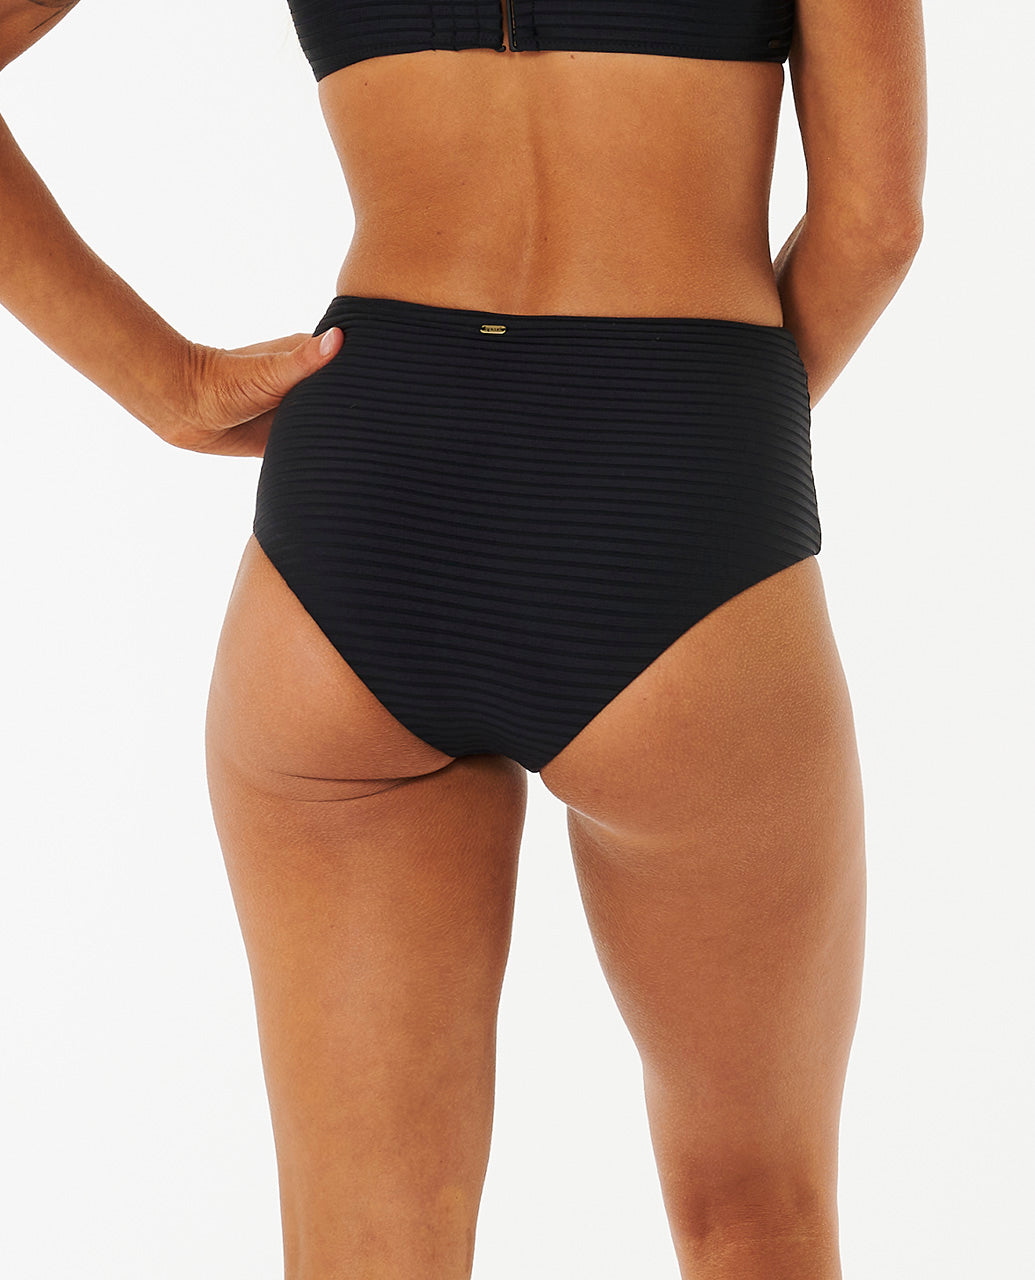 Women's PREMIUM SURF HI WAIST GOOD Bikini Set Bottom